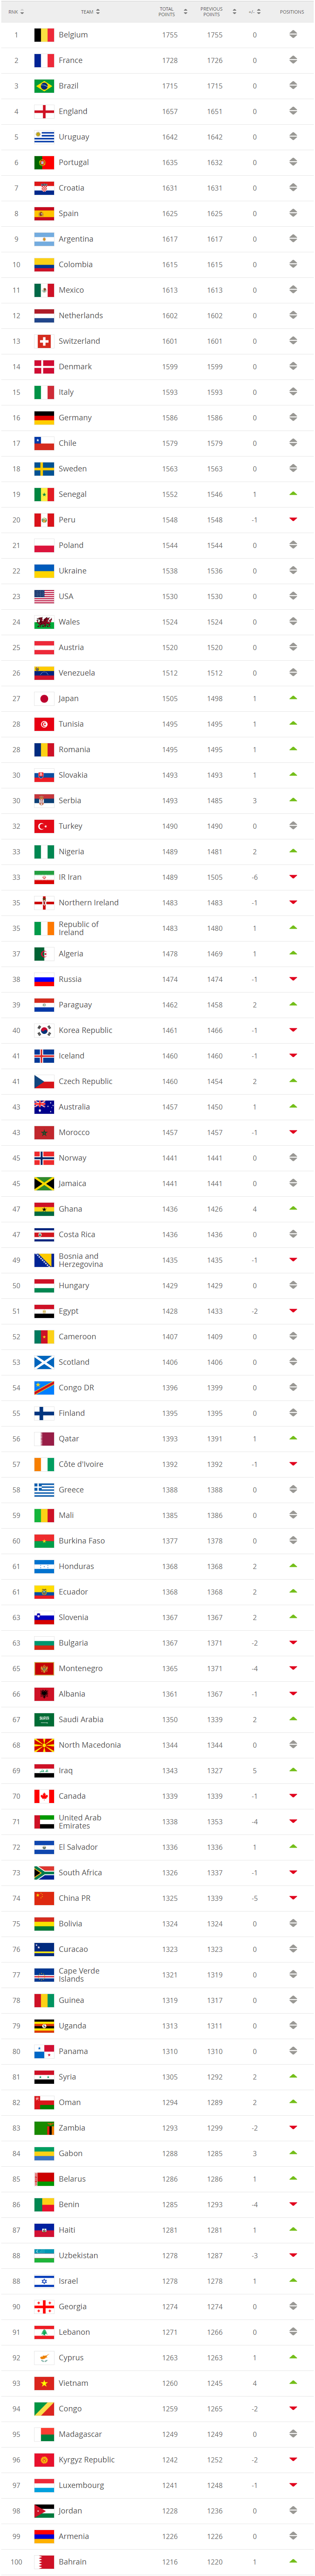 The FIFA Coca-Cola World Ranking 191114.png